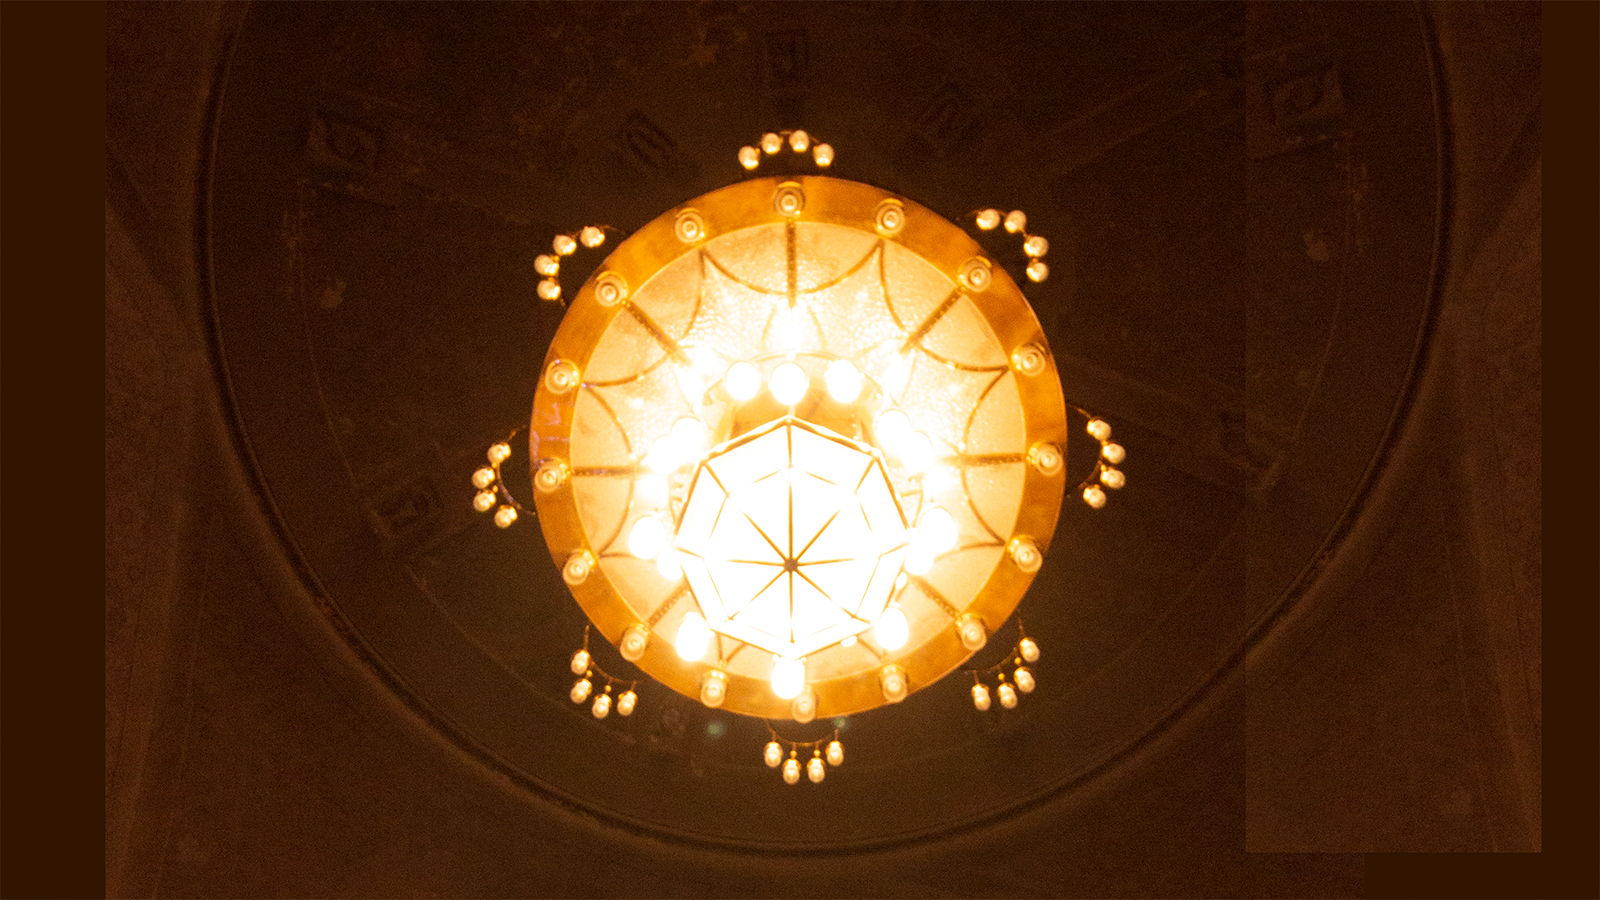 Bottom-Up shot of central chandelier of Philippuskirche.